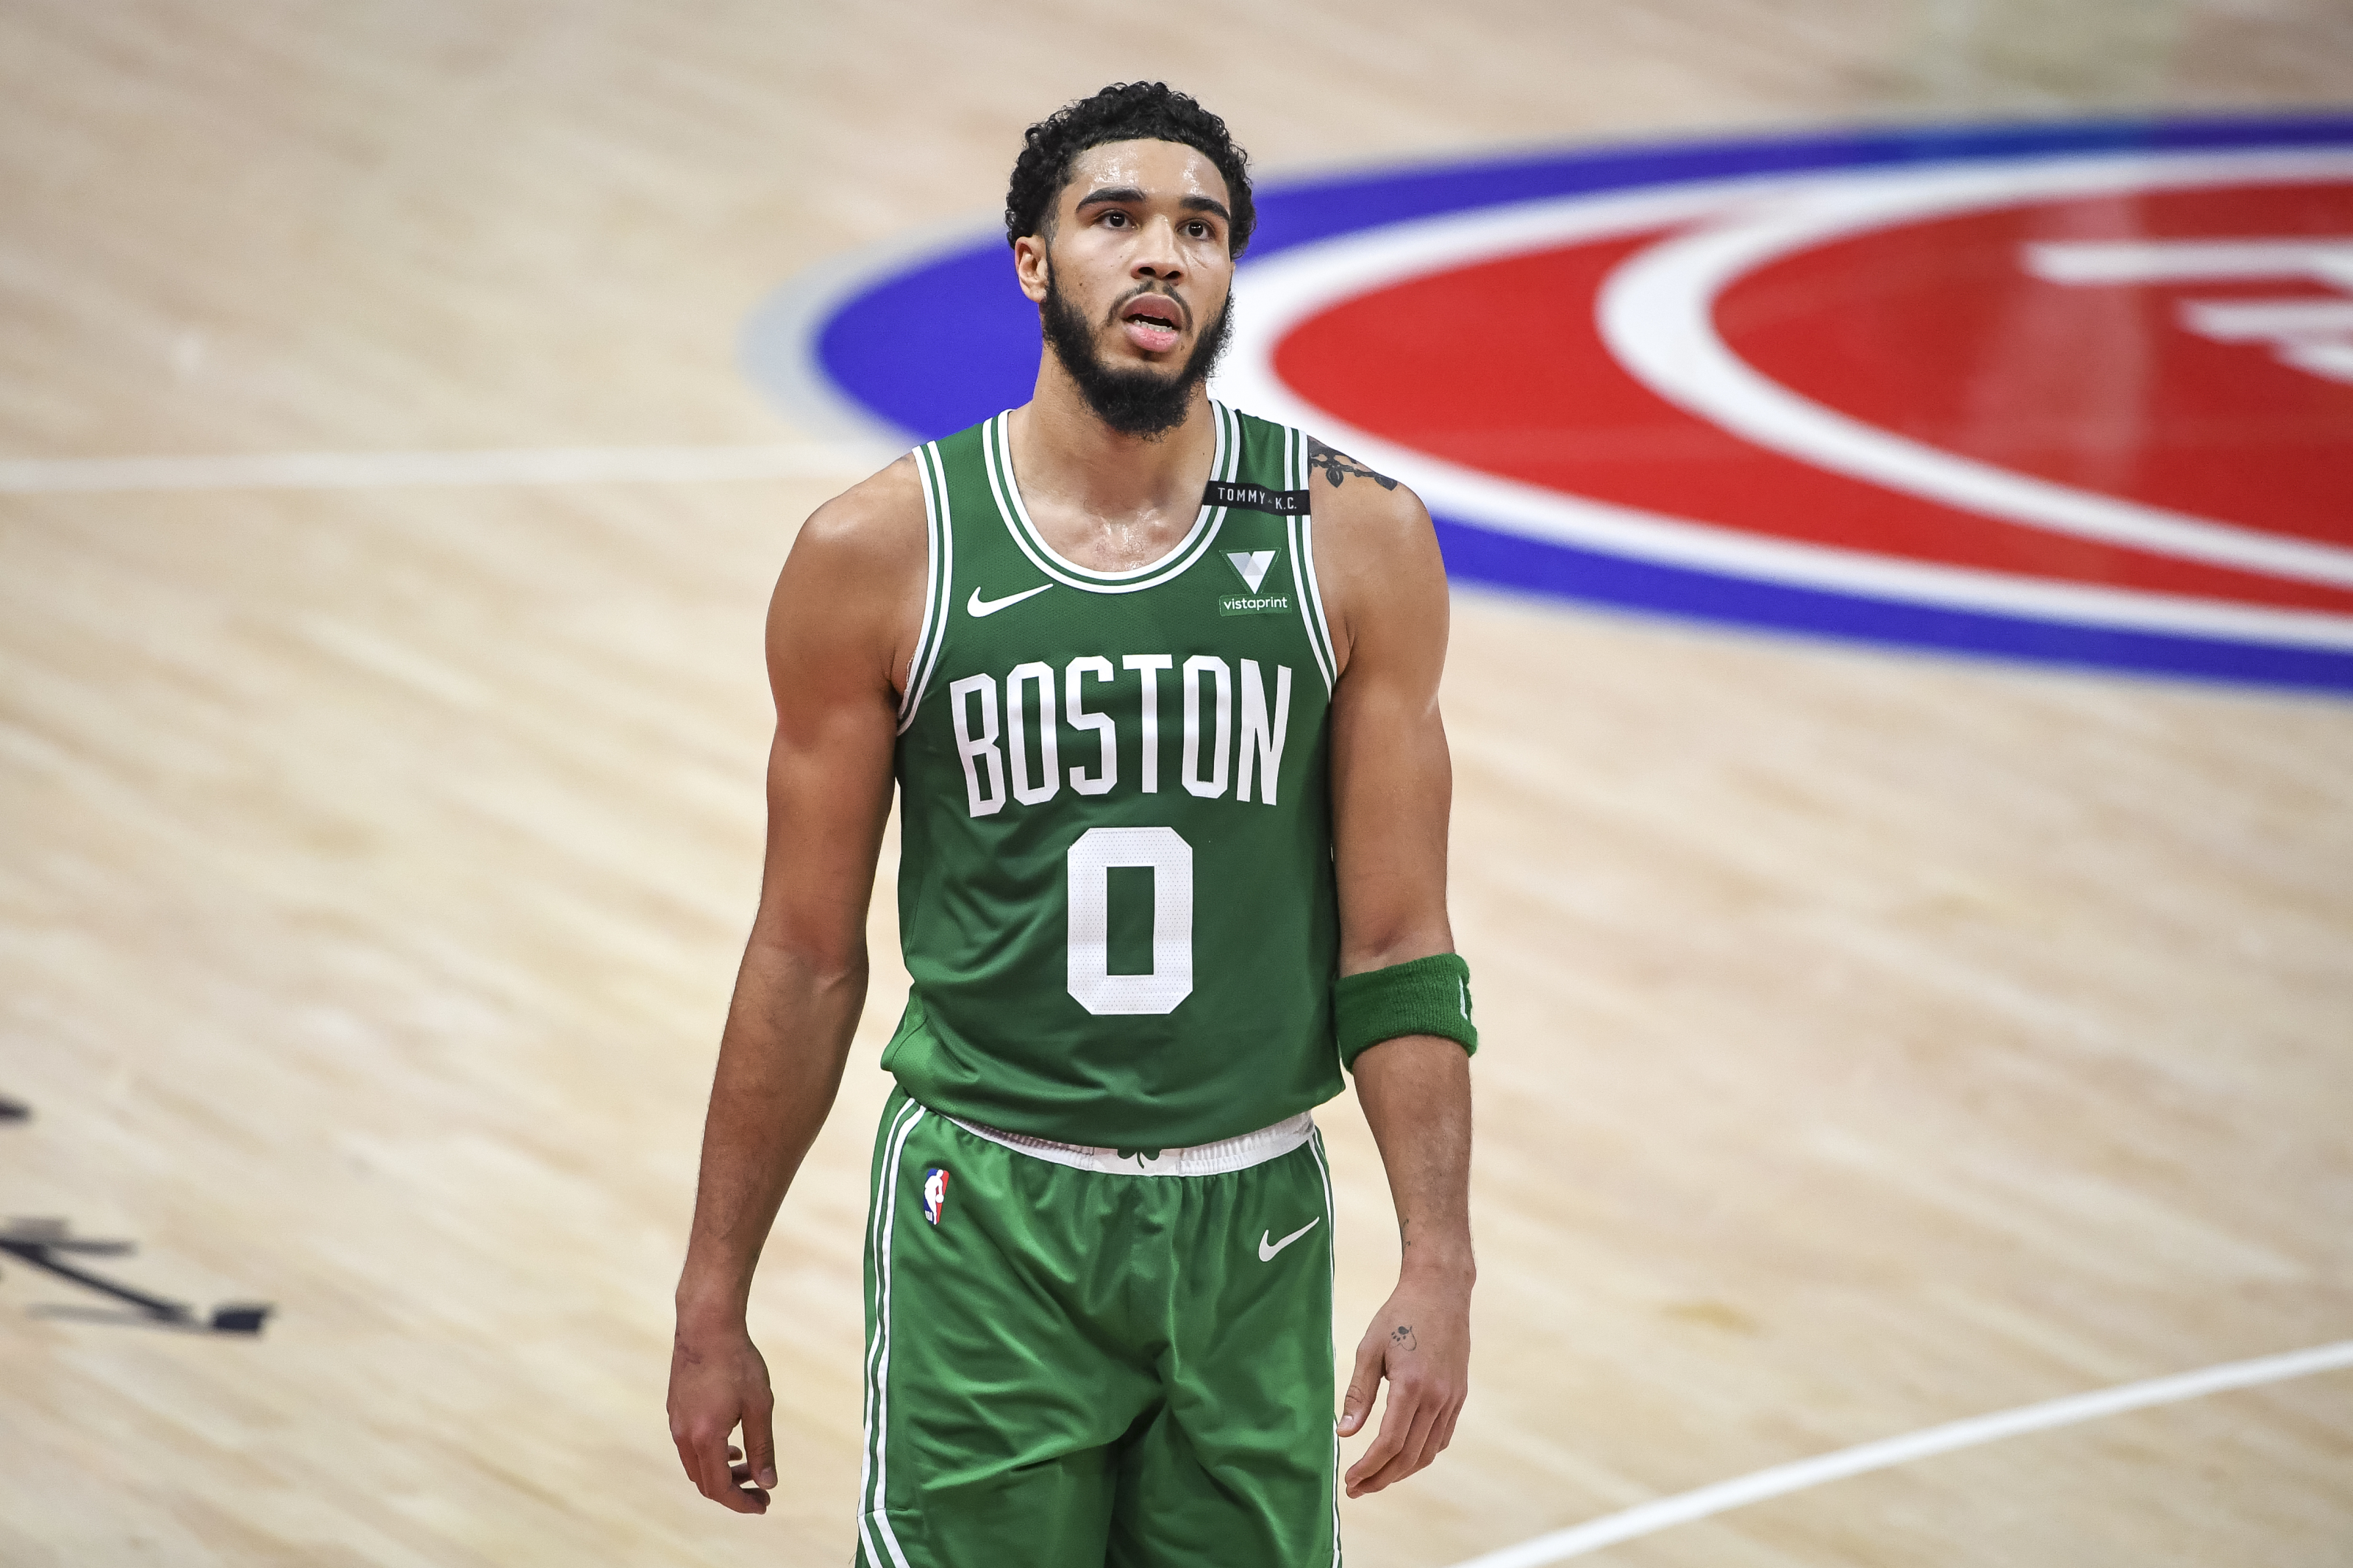 VistaPrint on X: Nothing says Boston like the Boston @Celtics